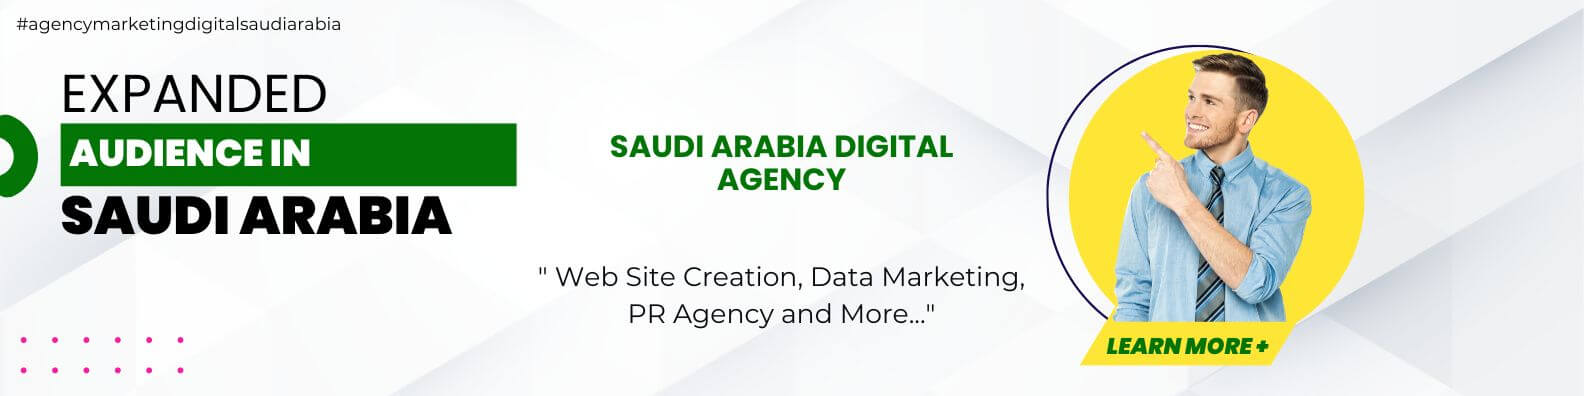 Banner agency-marketing-digital-saudi-arabia.com (4) (1)